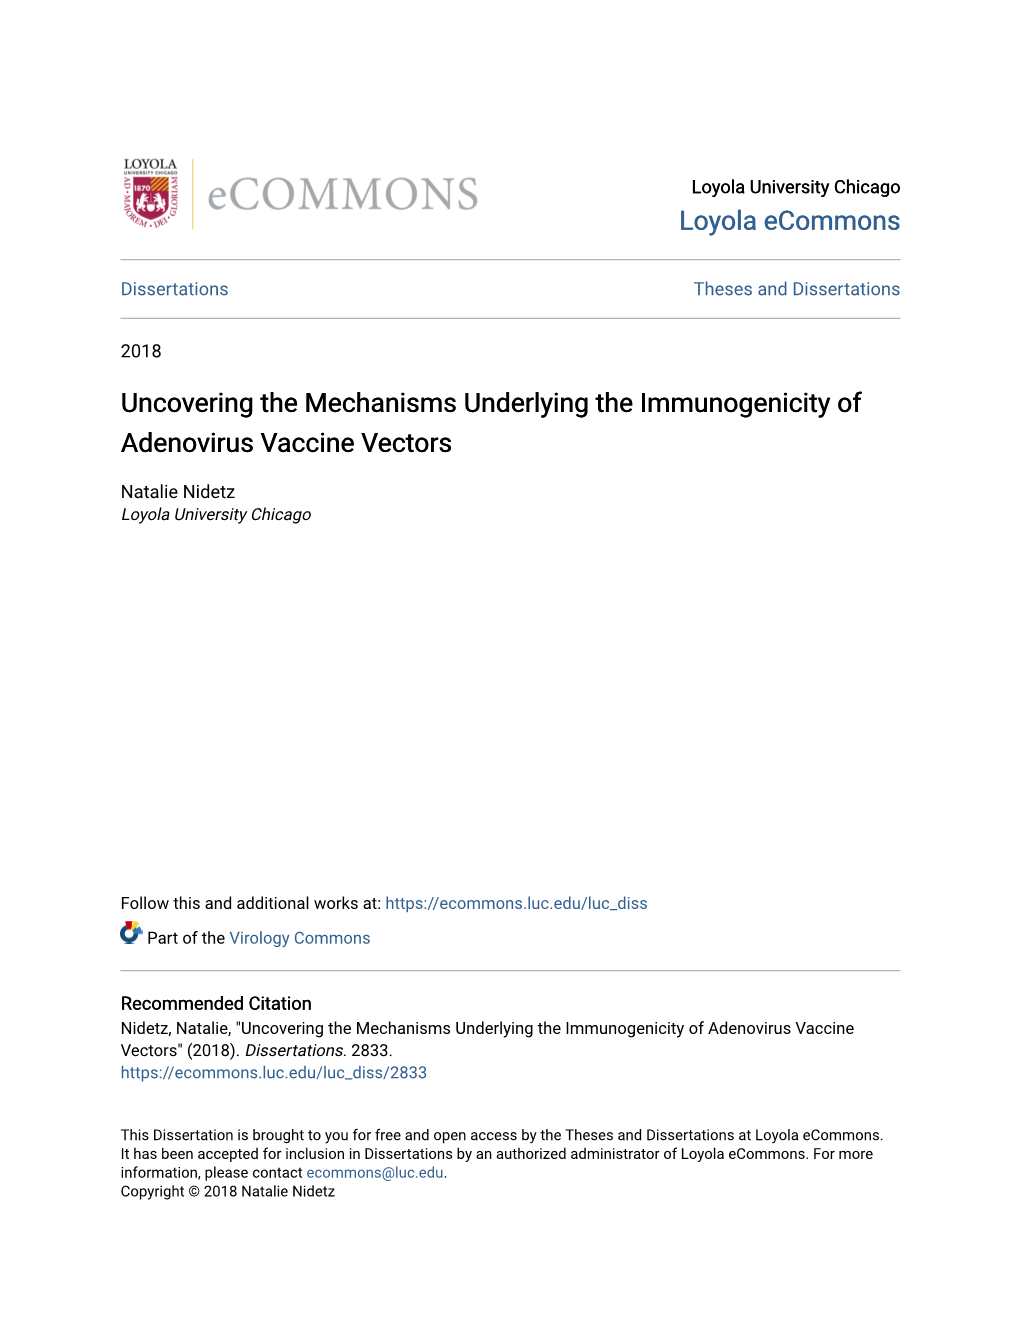 Uncovering the Mechanisms Underlying the Immunogenicity of Adenovirus Vaccine Vectors